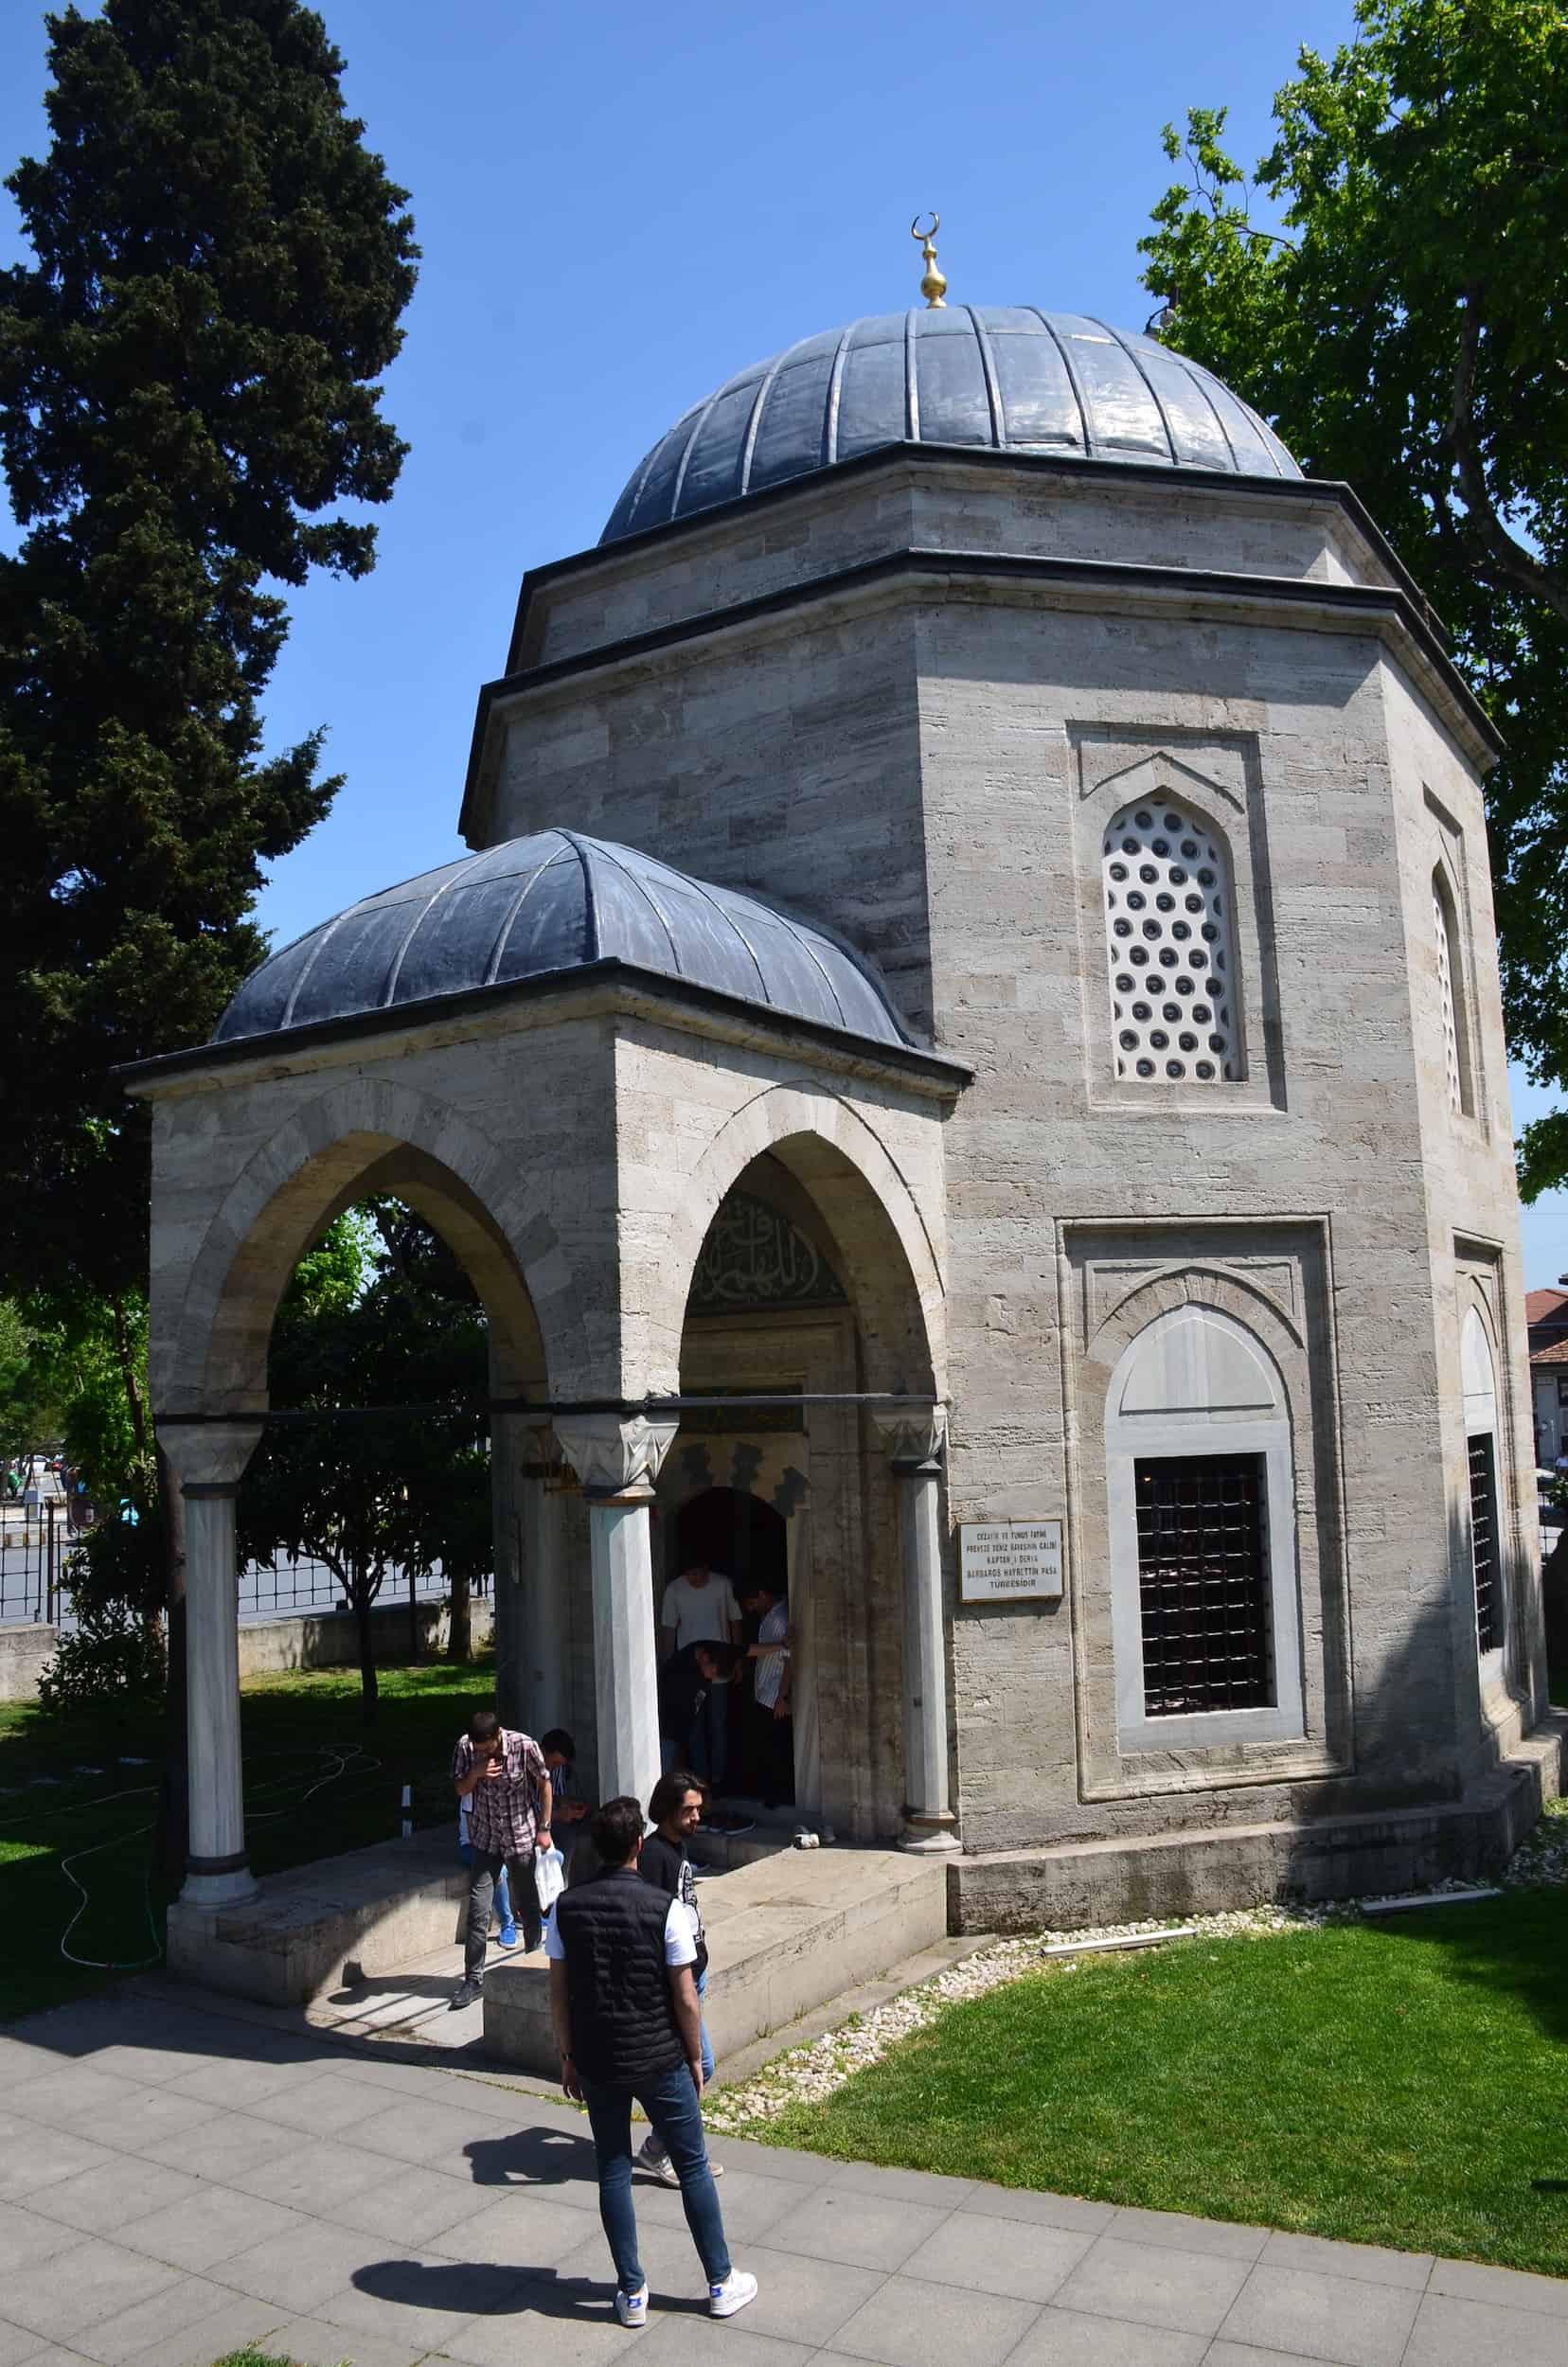 Tomb of Barbaros Hayreddin Pasha in Beşiktaş, Istanbul, Turkey